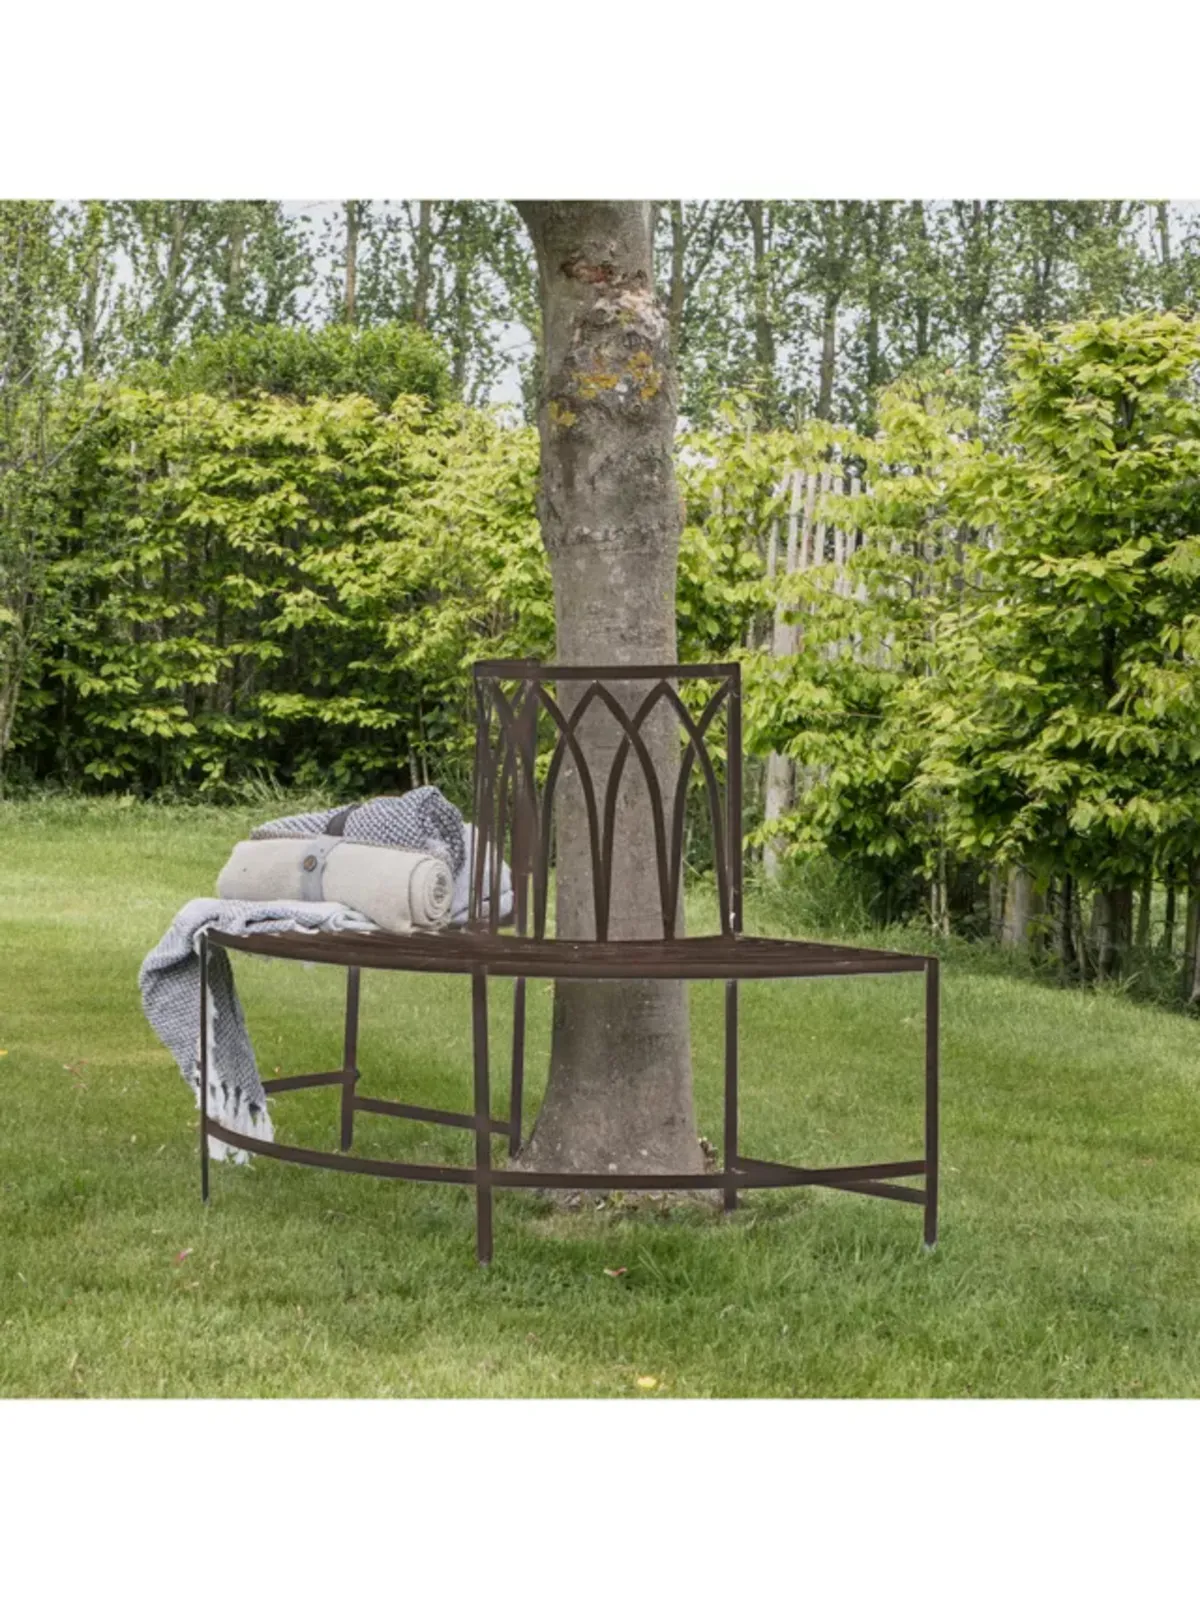 Metal semi circle bench seat around a tree trunk